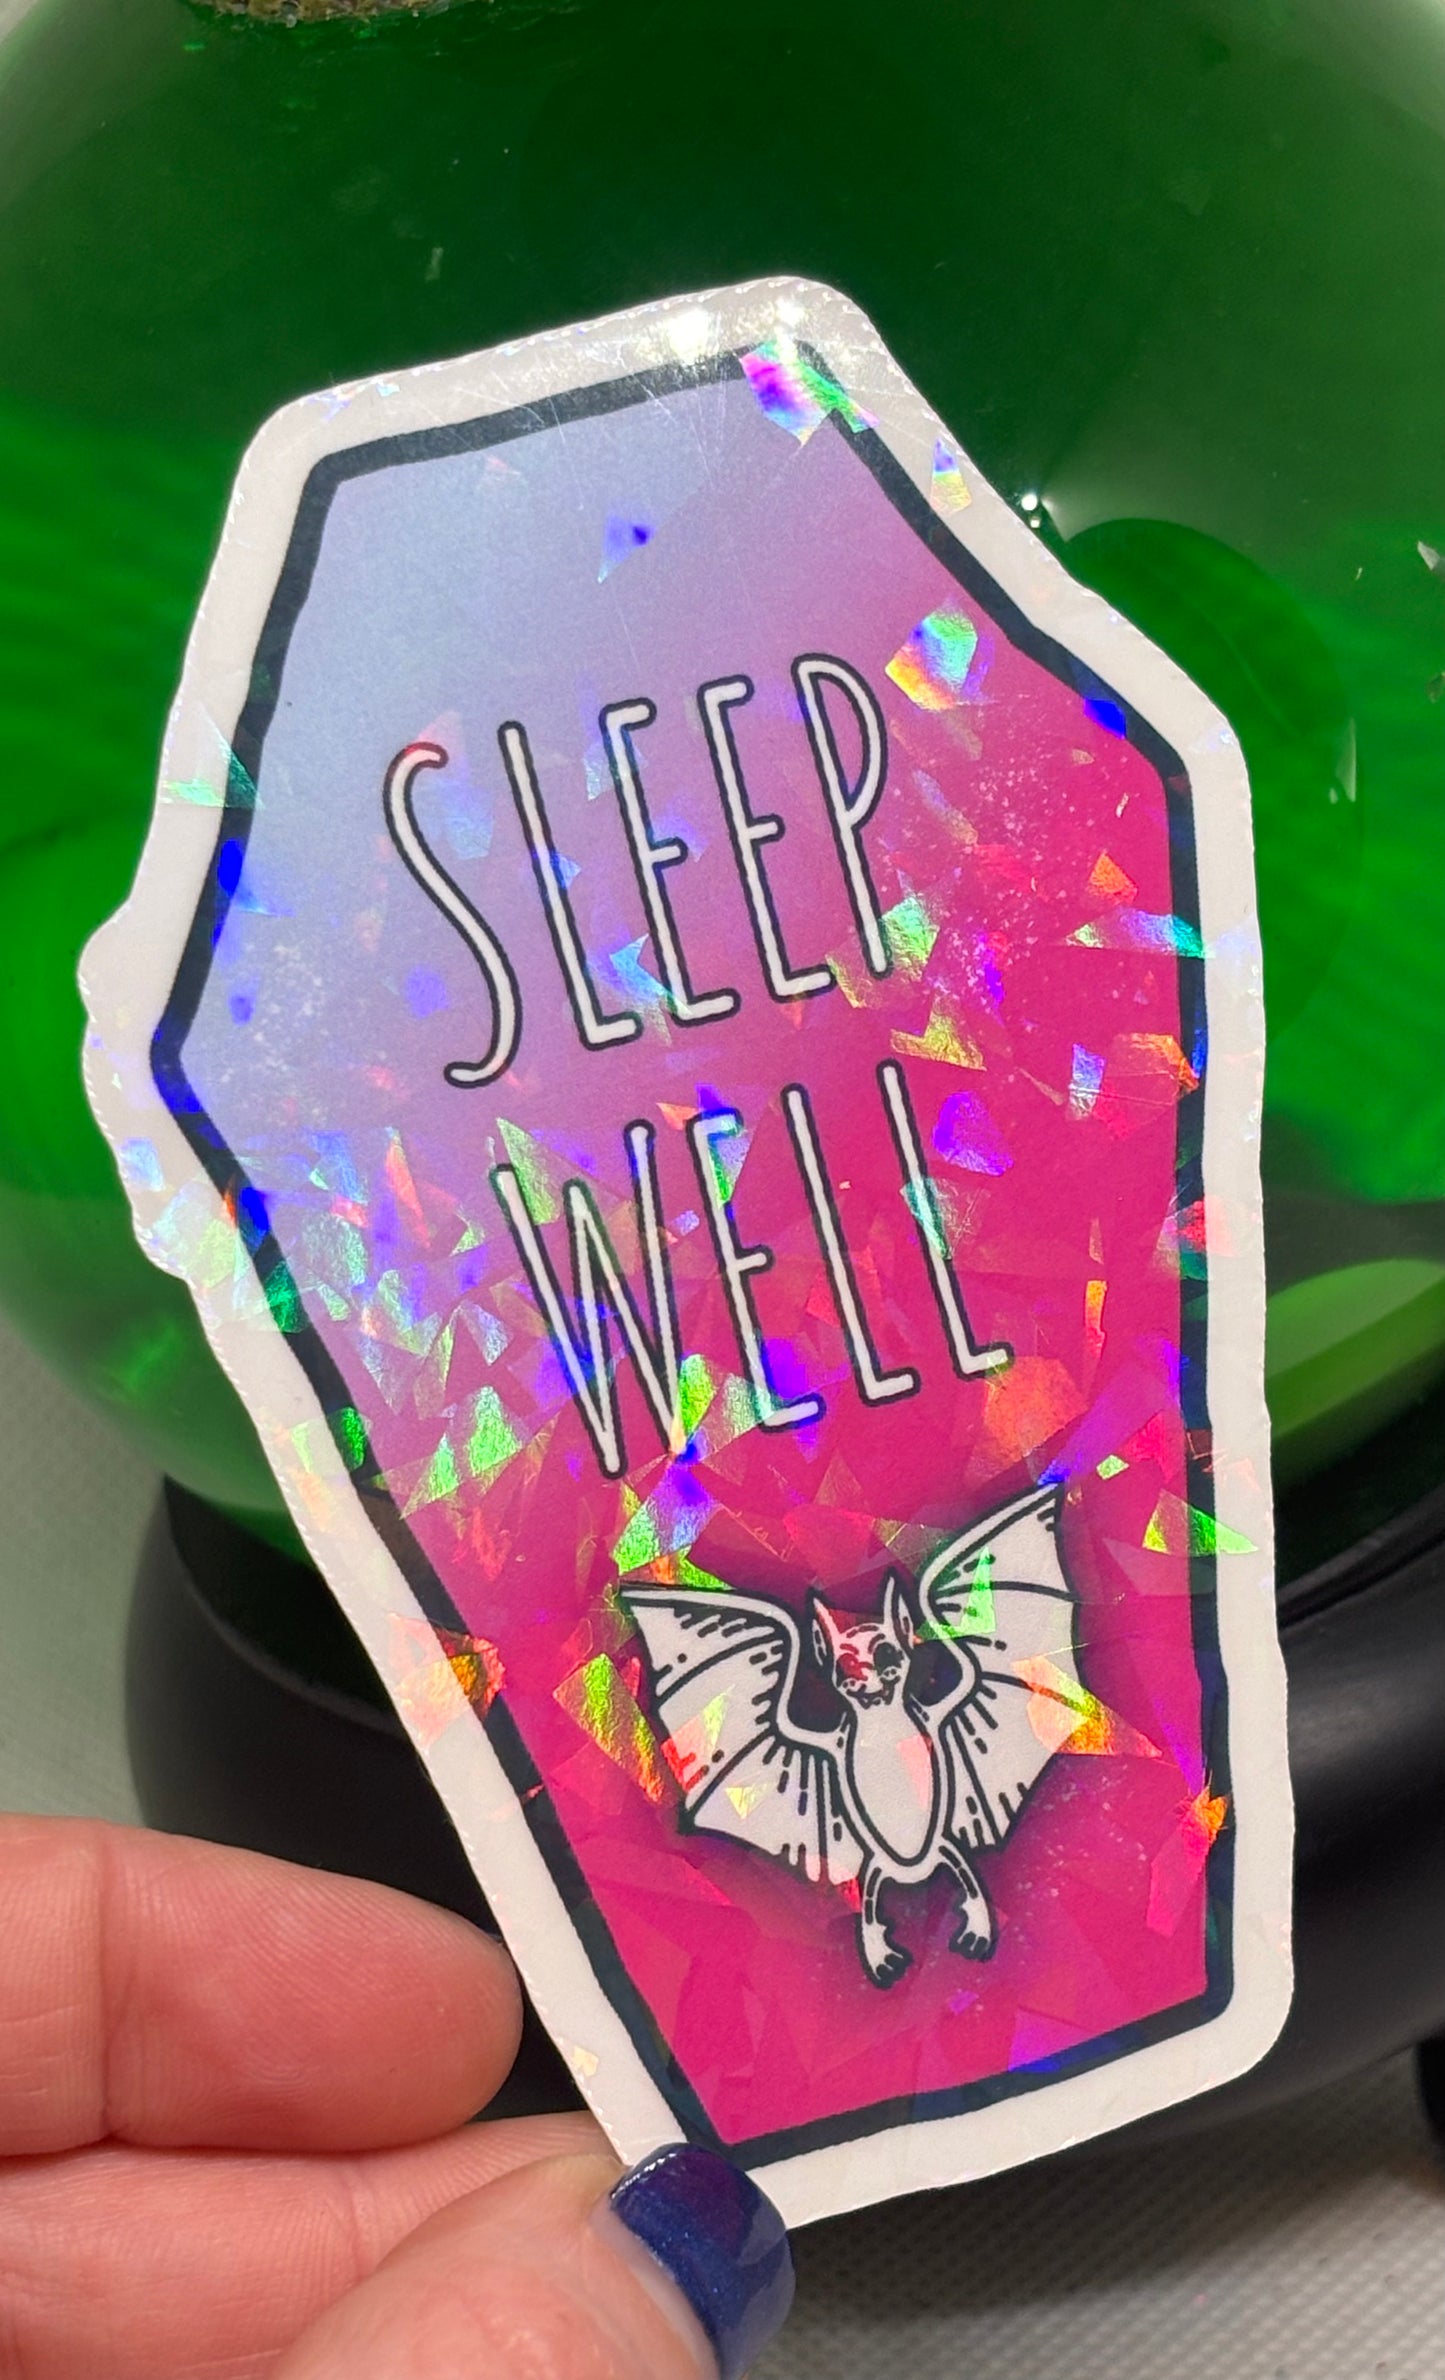 Sleep Well Sticker (Pink)